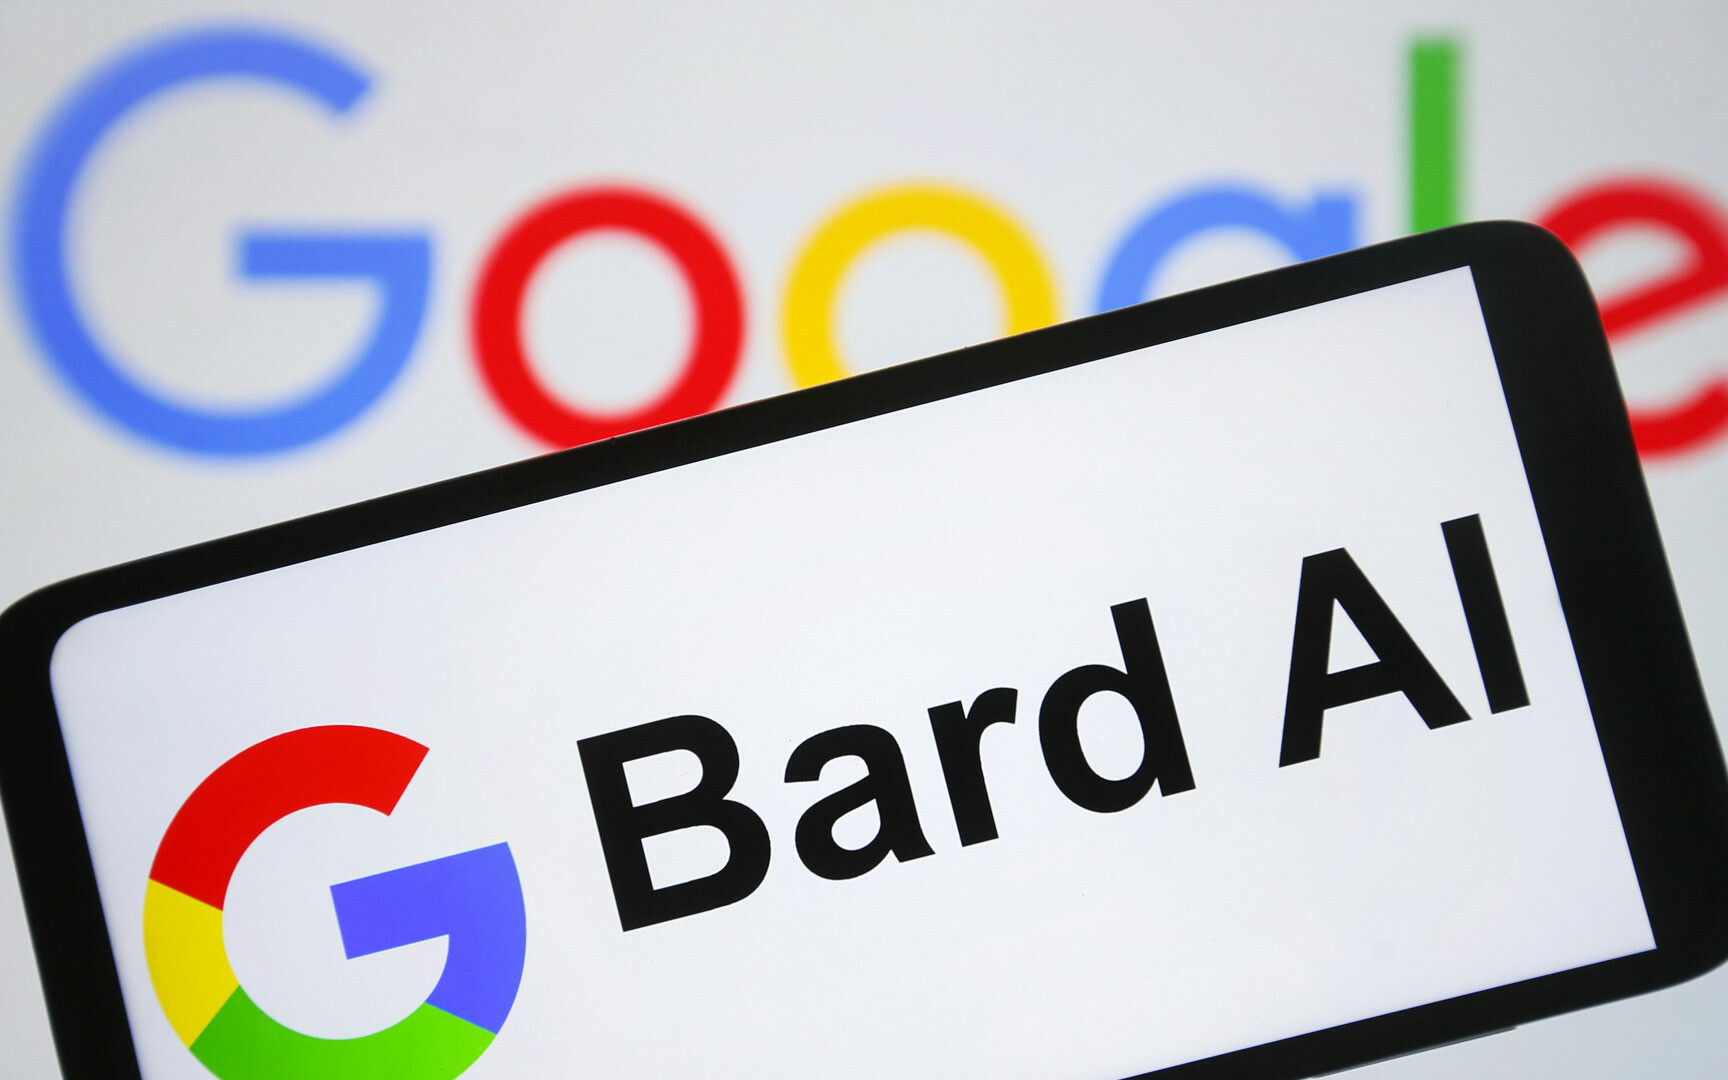 Google Bard AI w Polsce